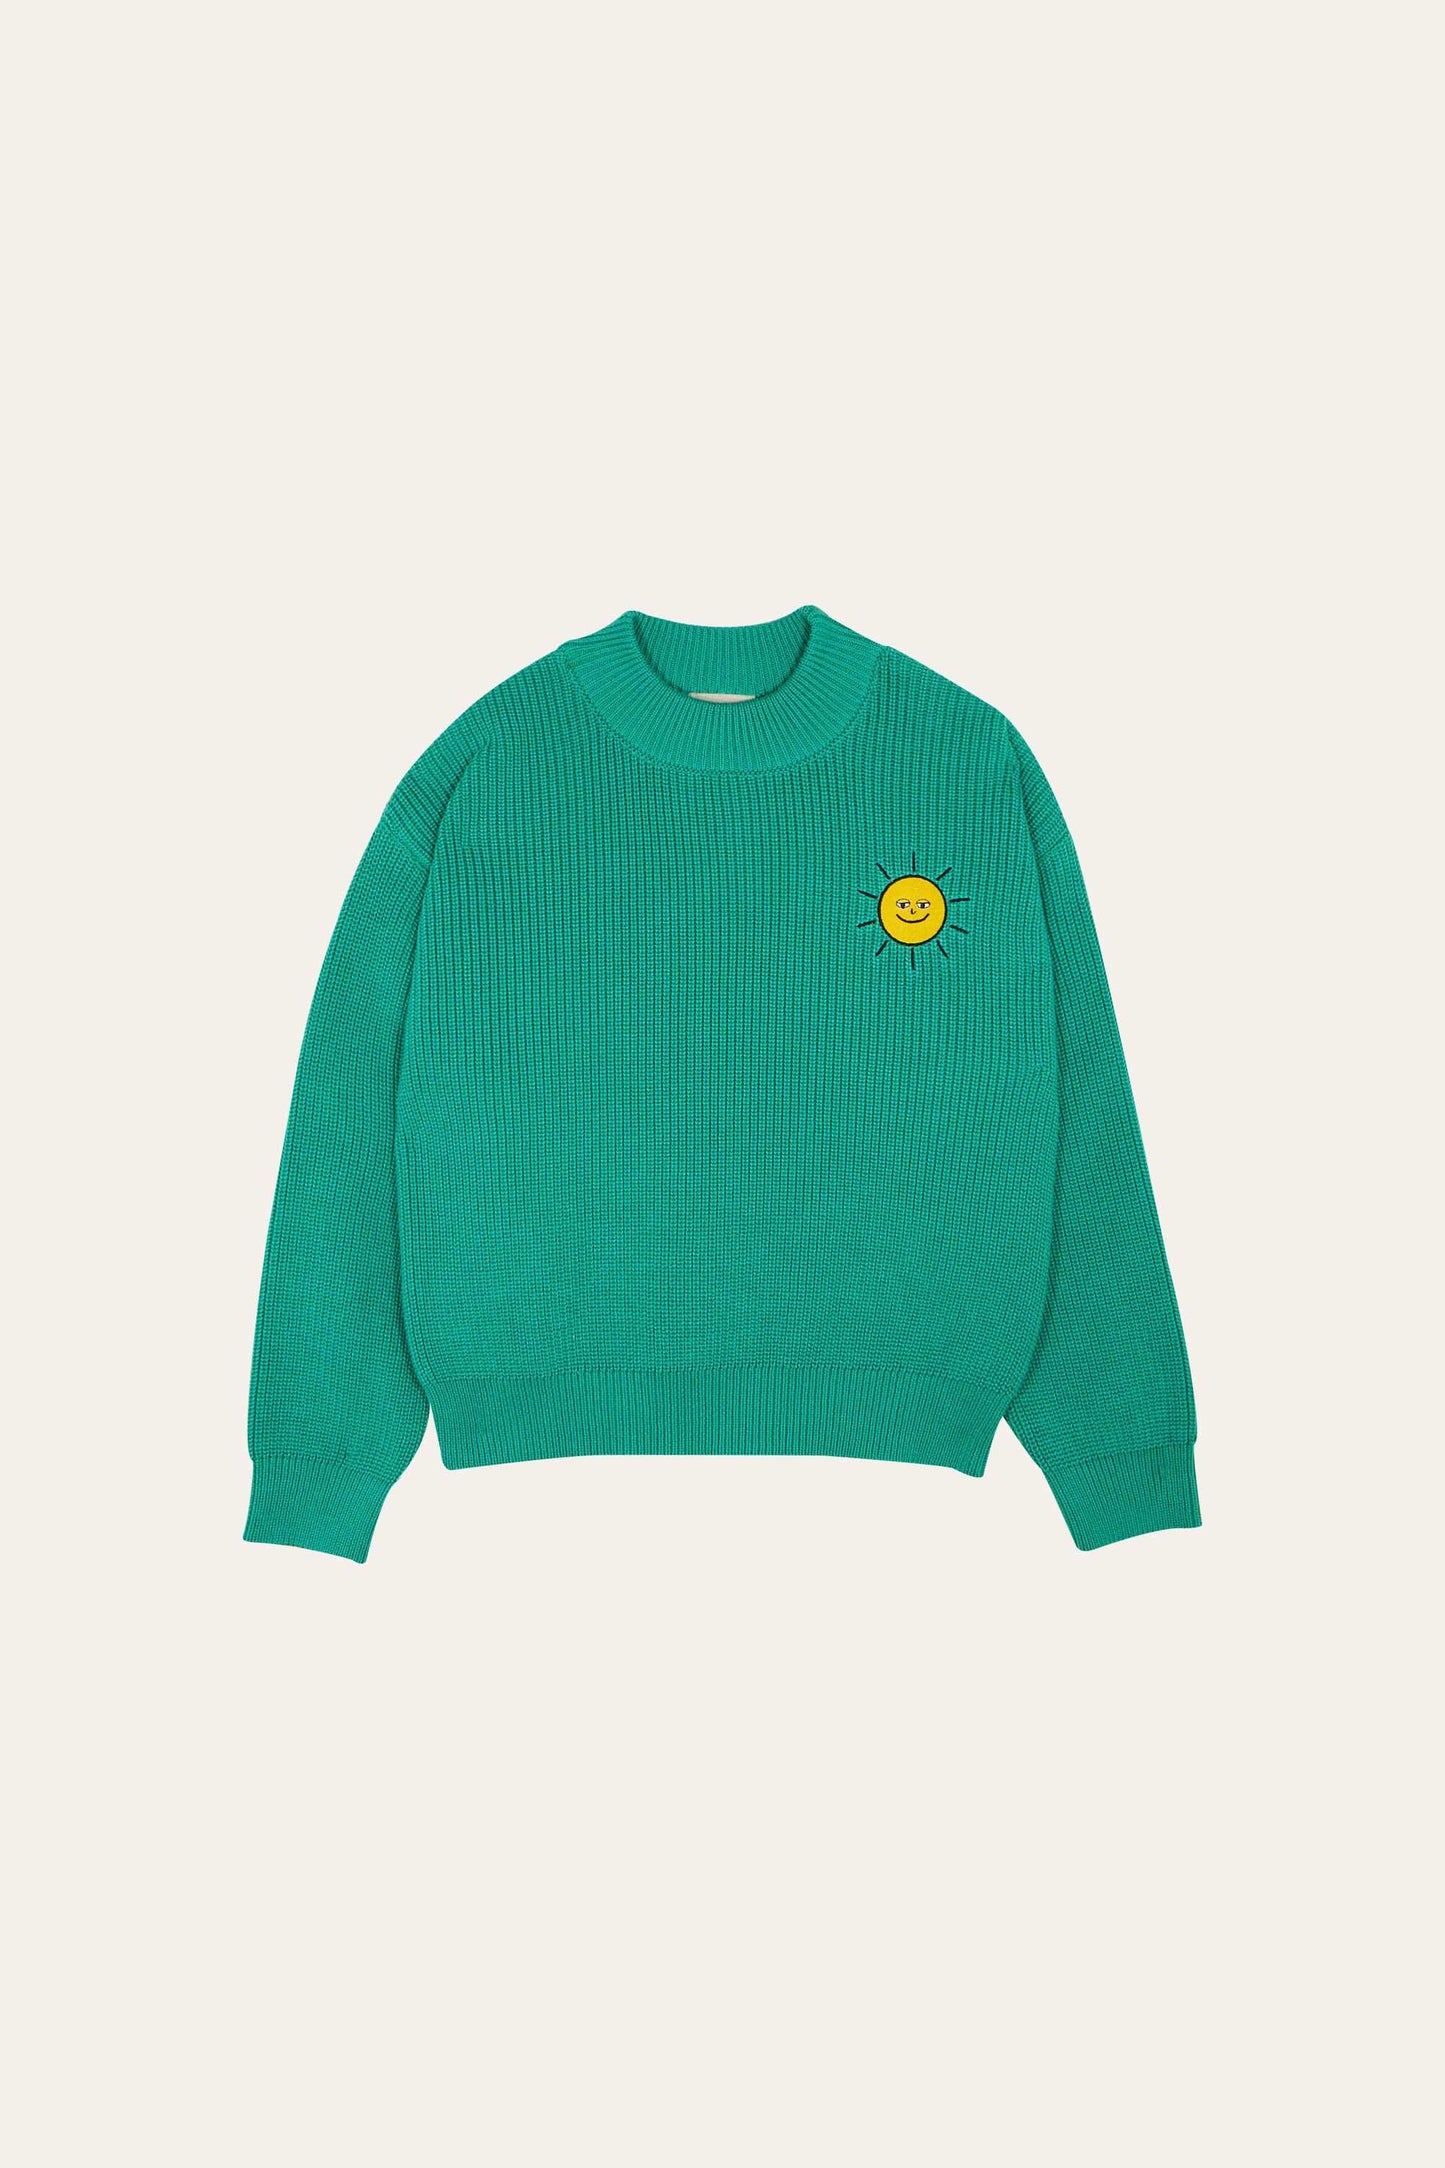 Green Sweater- The Campamento